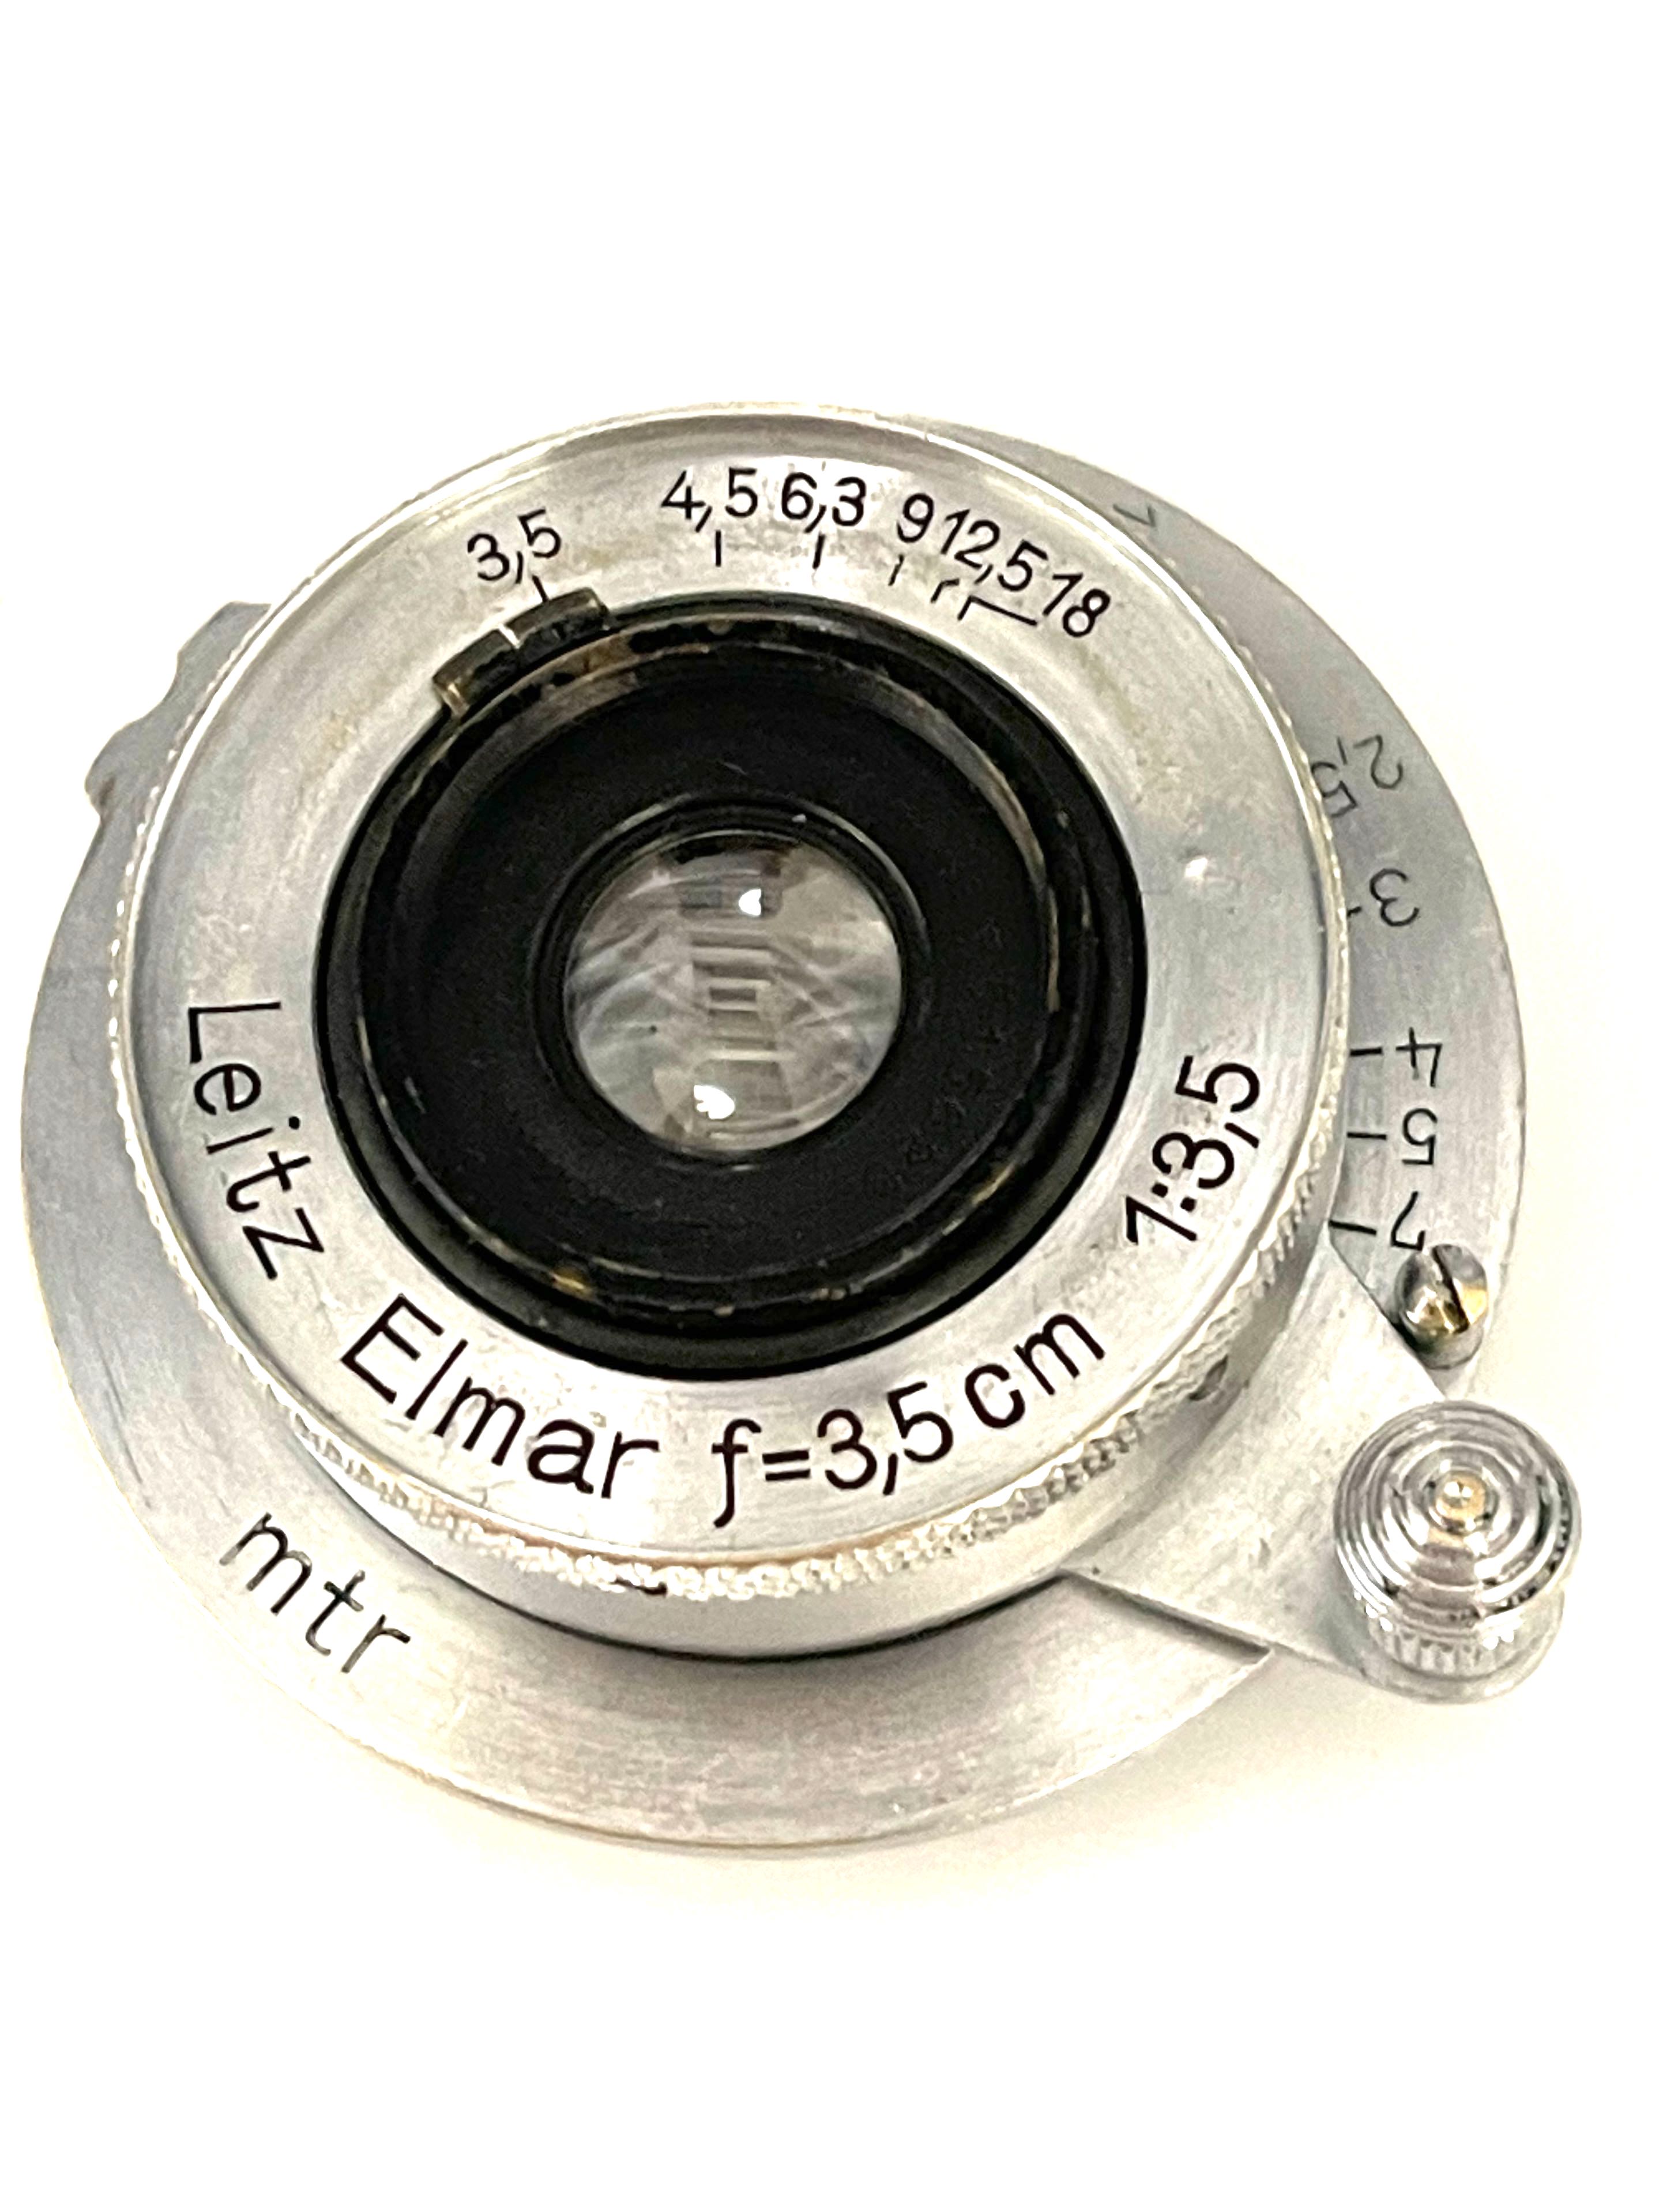 Leitz Elmar 35mm f3.5 L39-